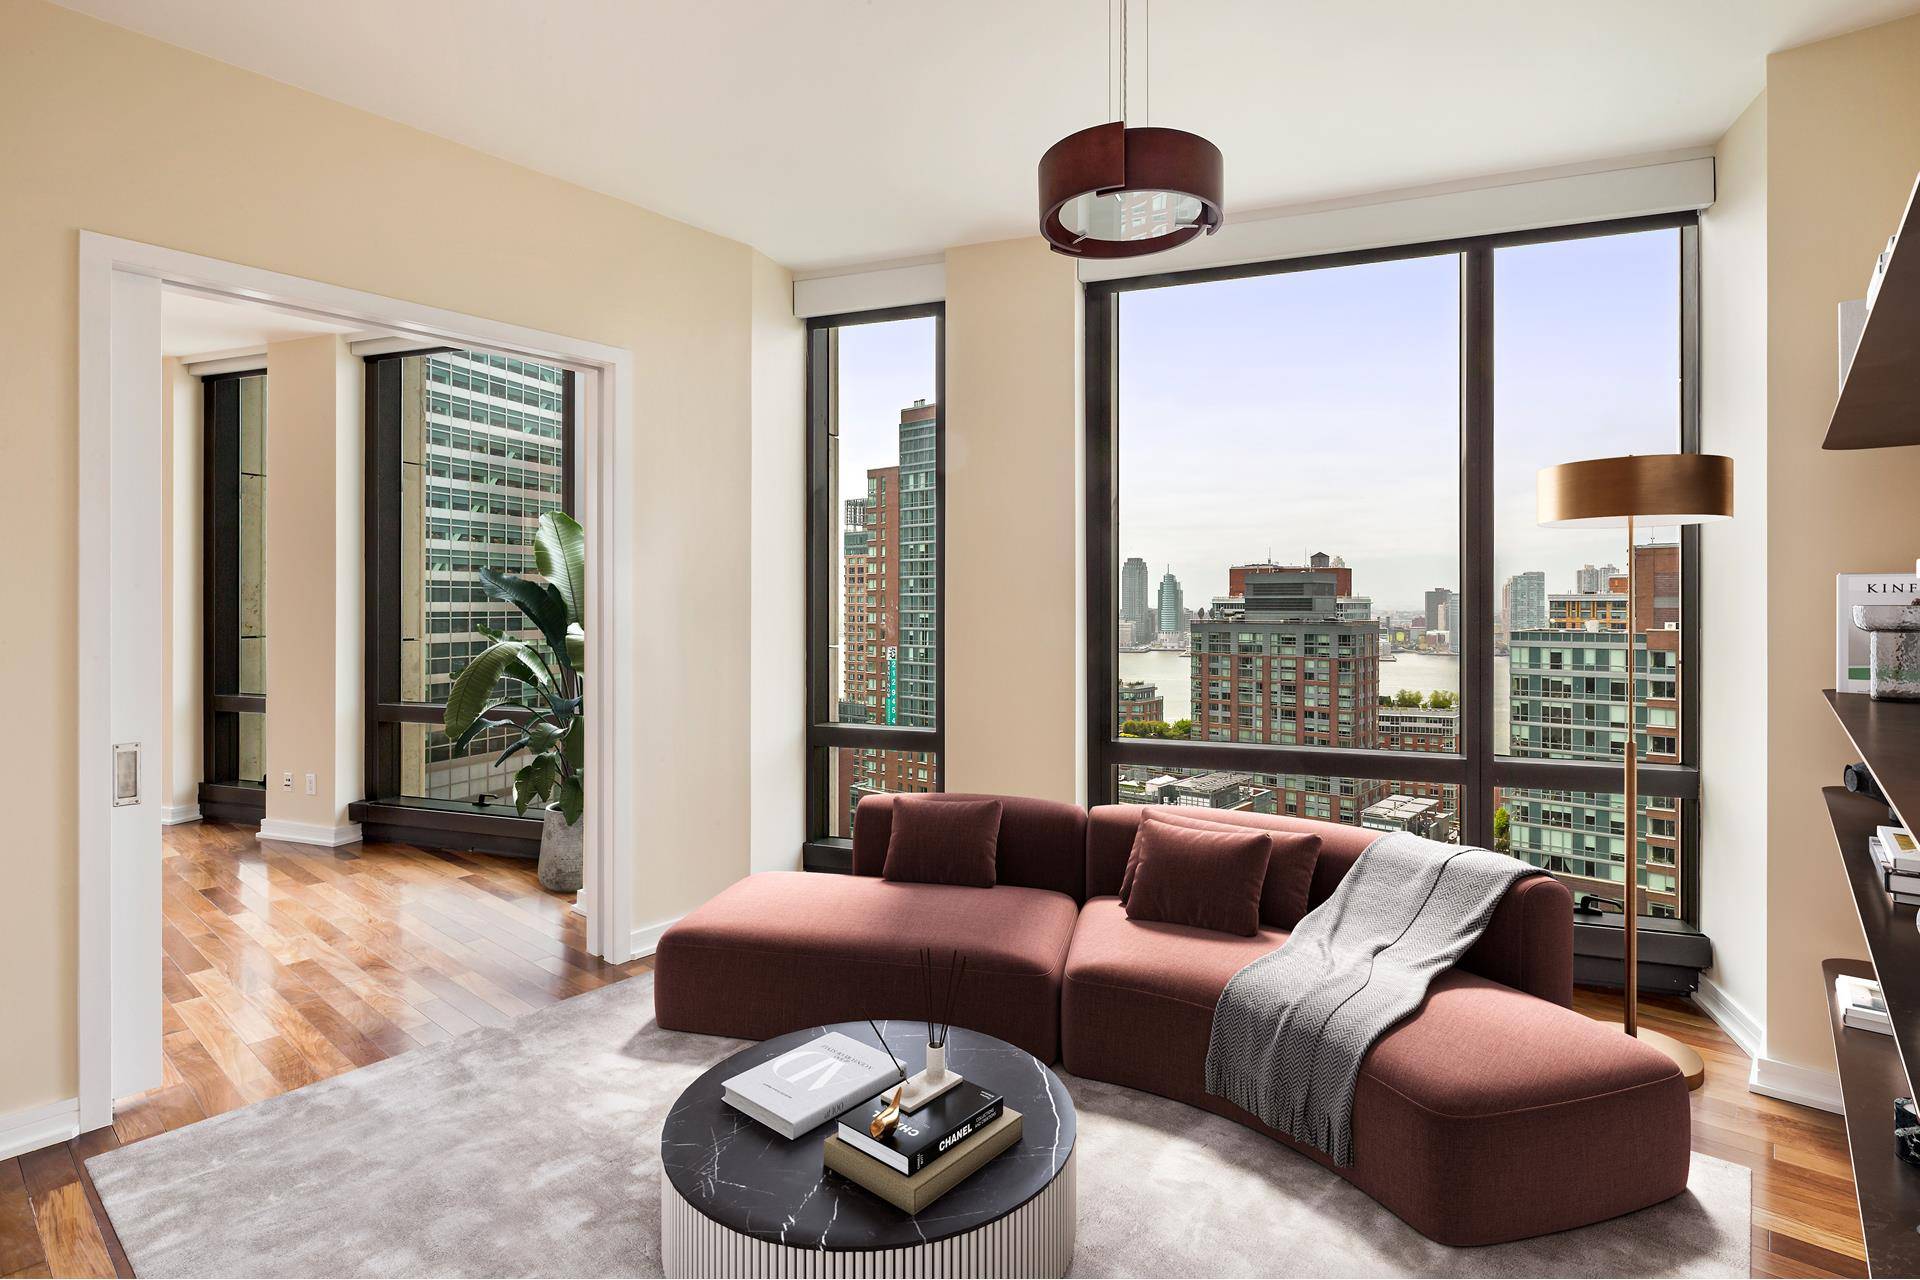 Introducing a stunning residence at 101 Warren Street Condominium, this triple mint three bedroom, 3.